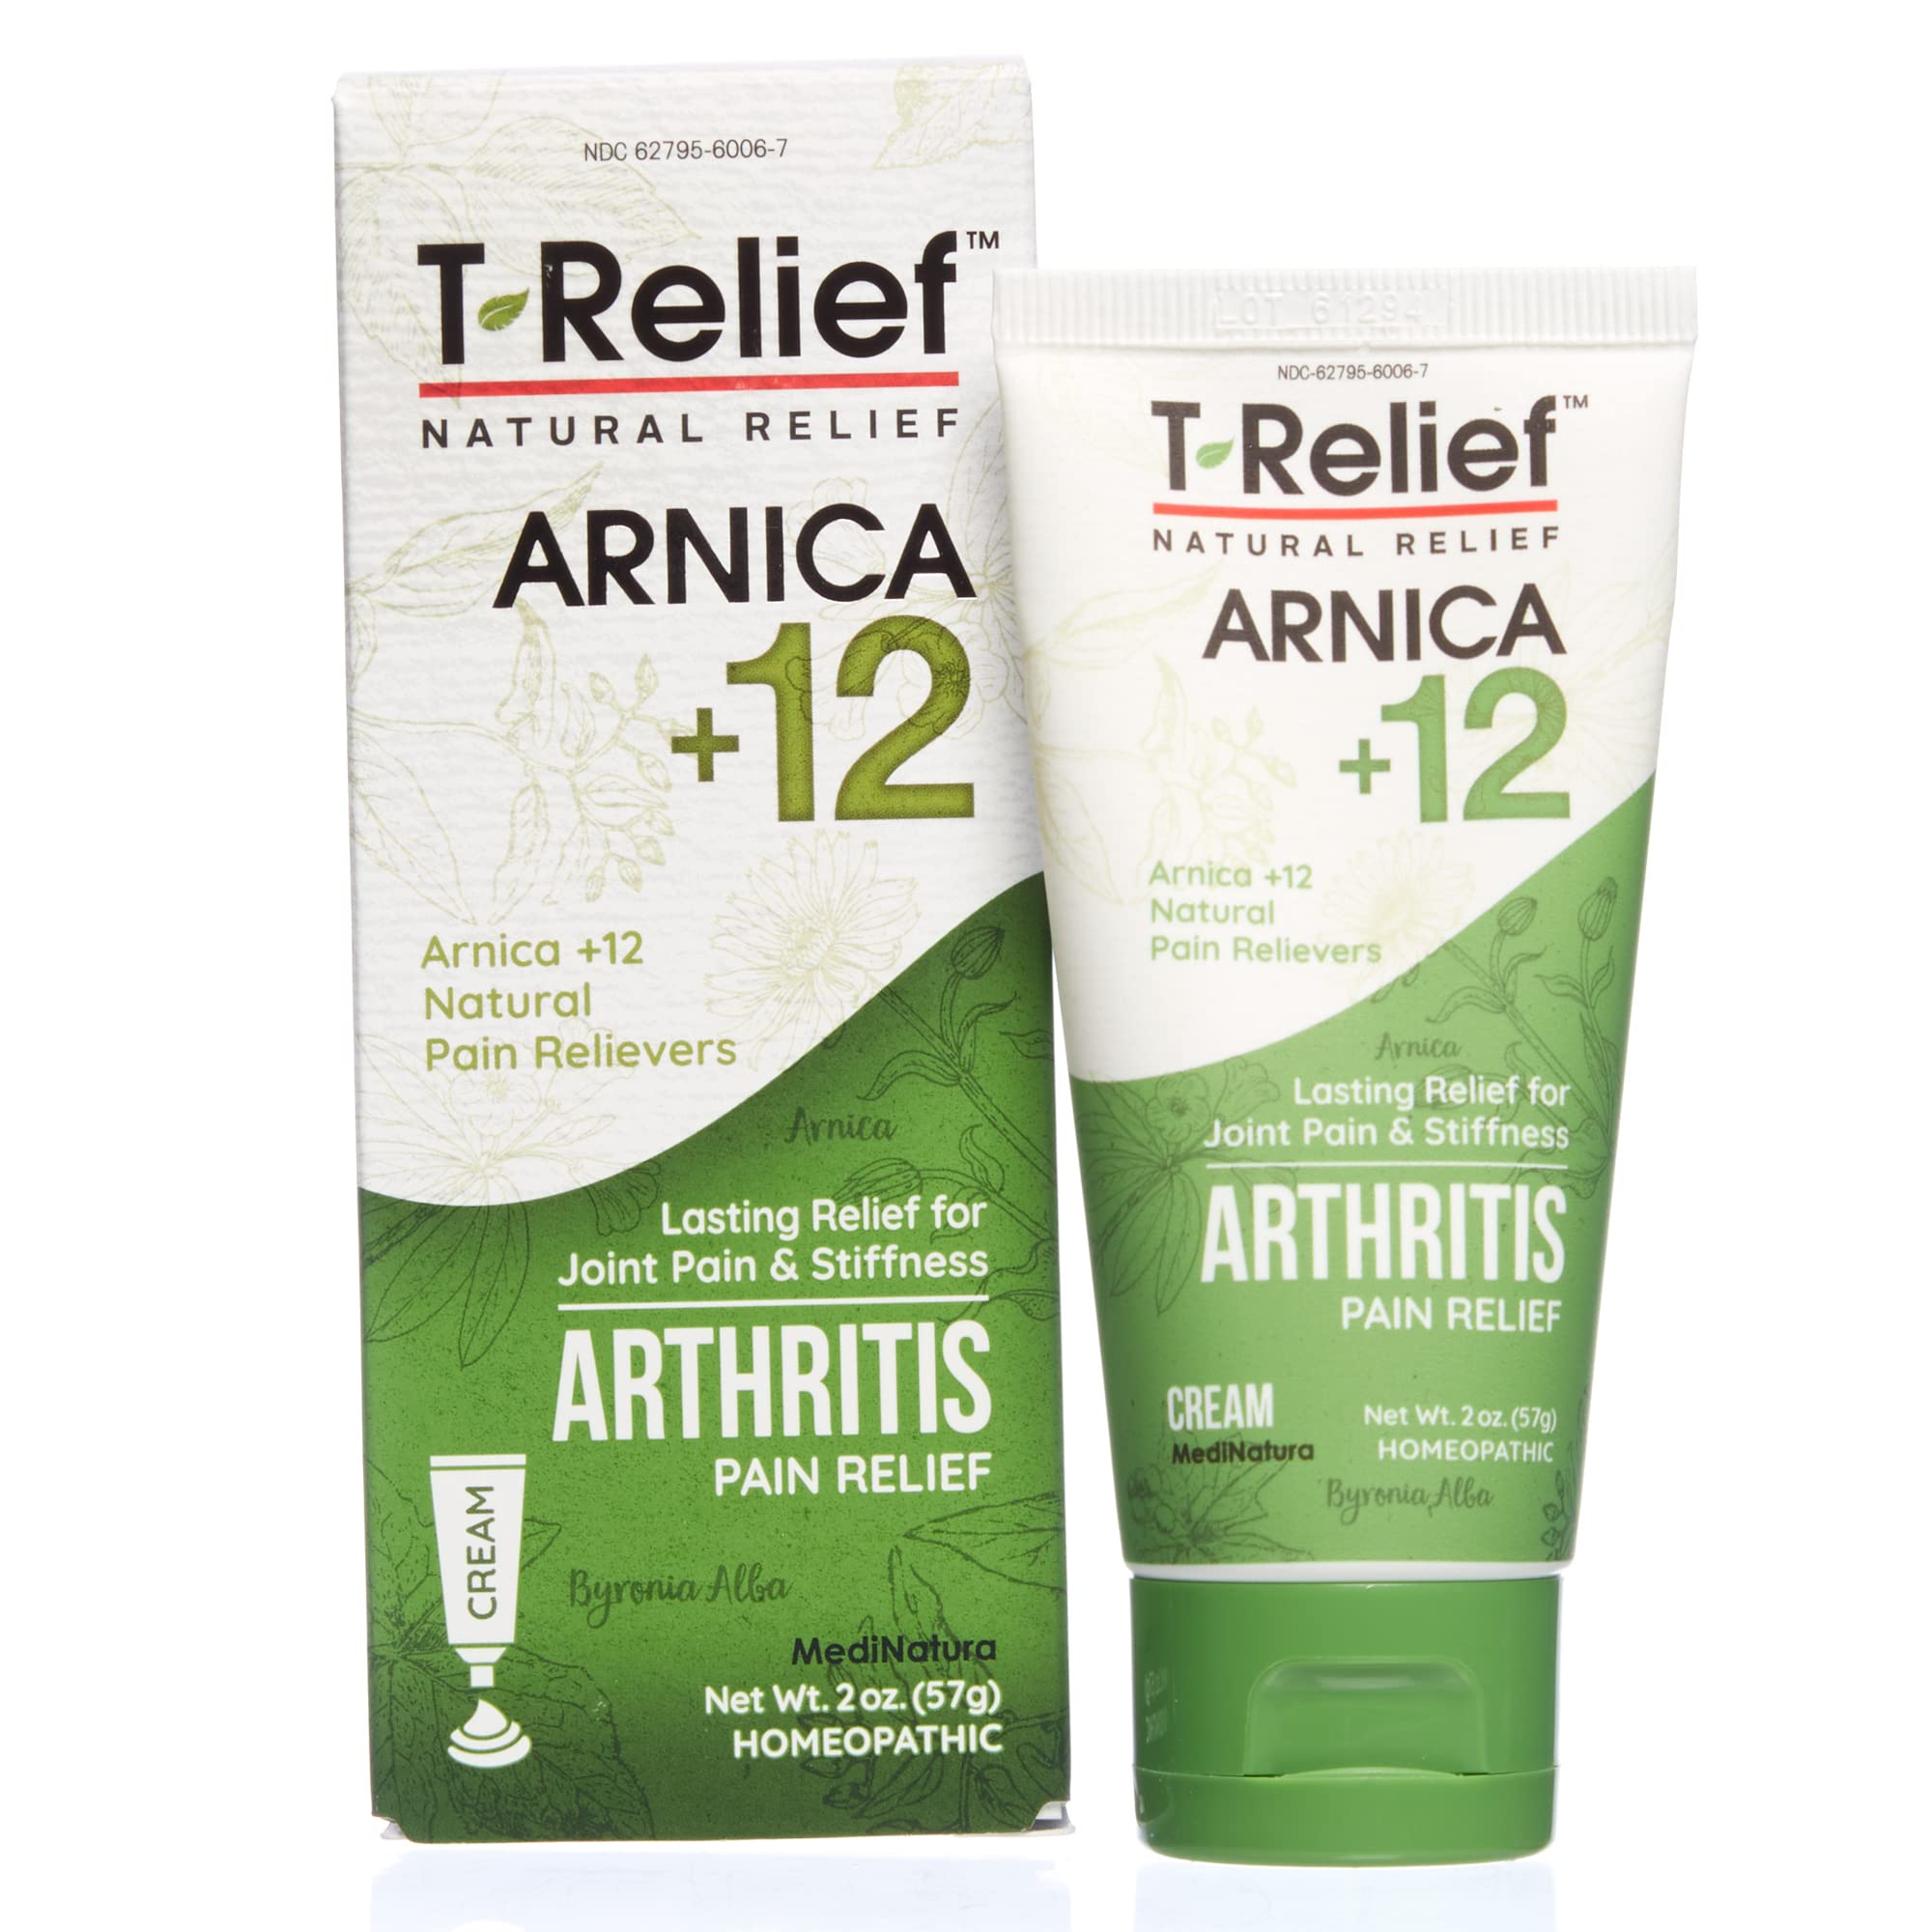 T-Relief Arnica +12 Extra Strength Pain Relief Gel, MediNatura